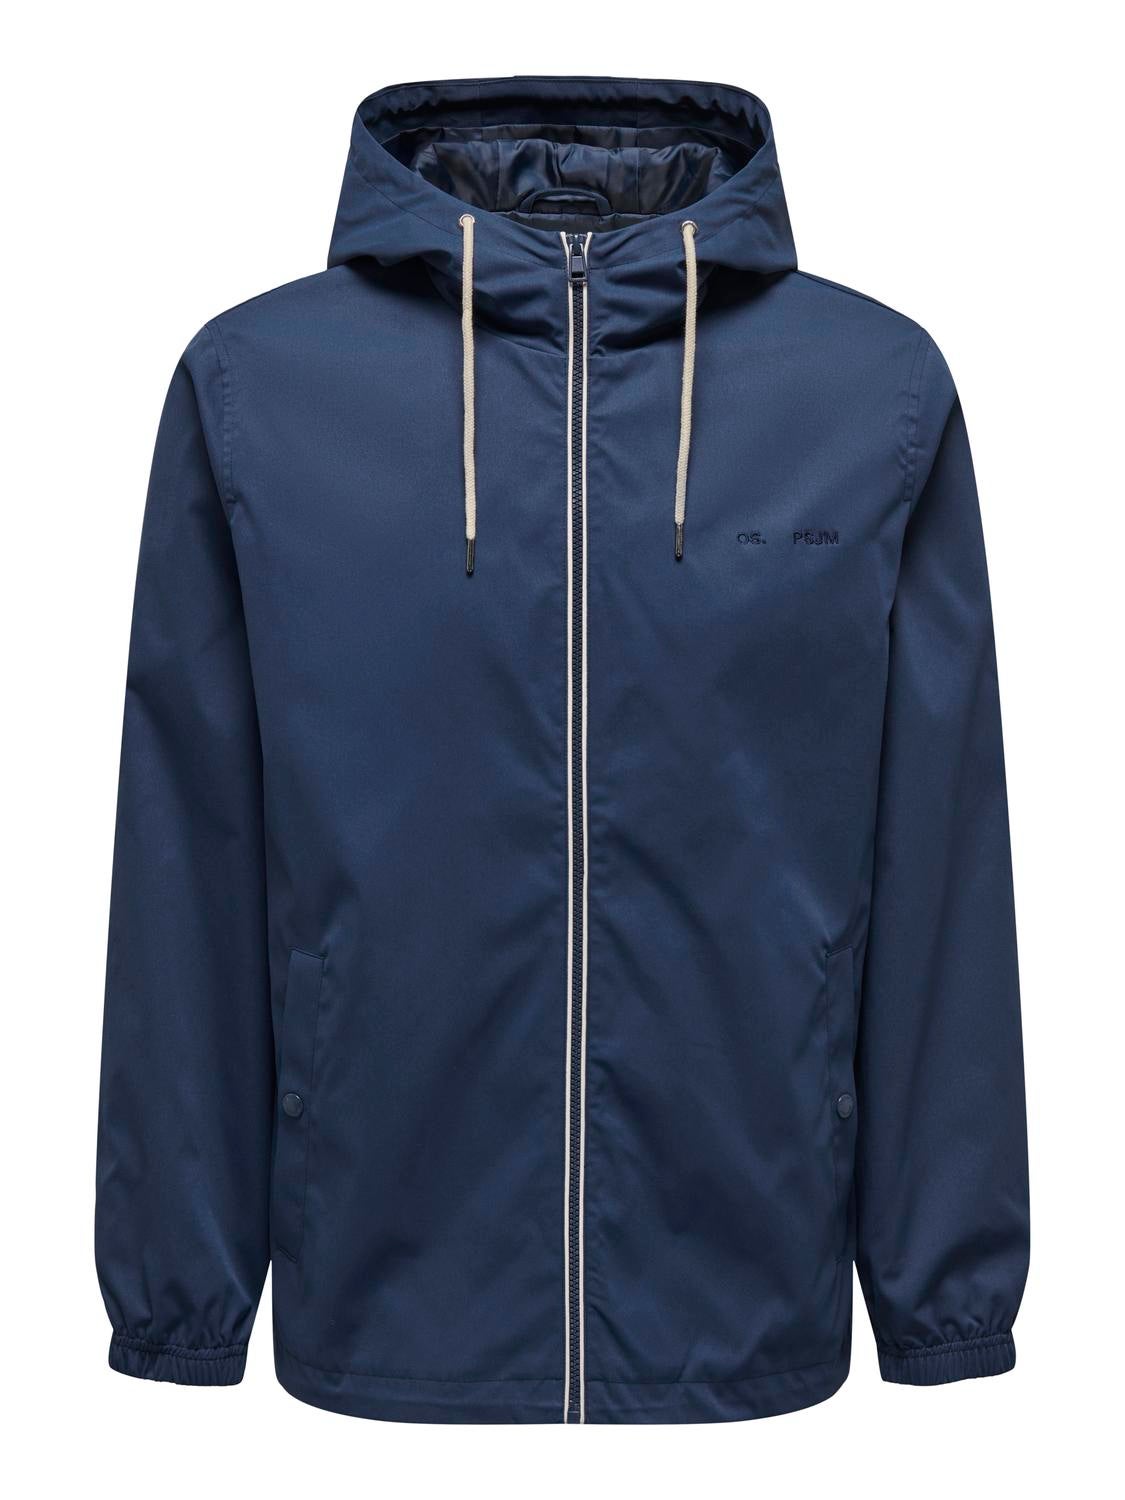 Hood with string regulation Jacket | Dark Blue | ONLY & SONS®